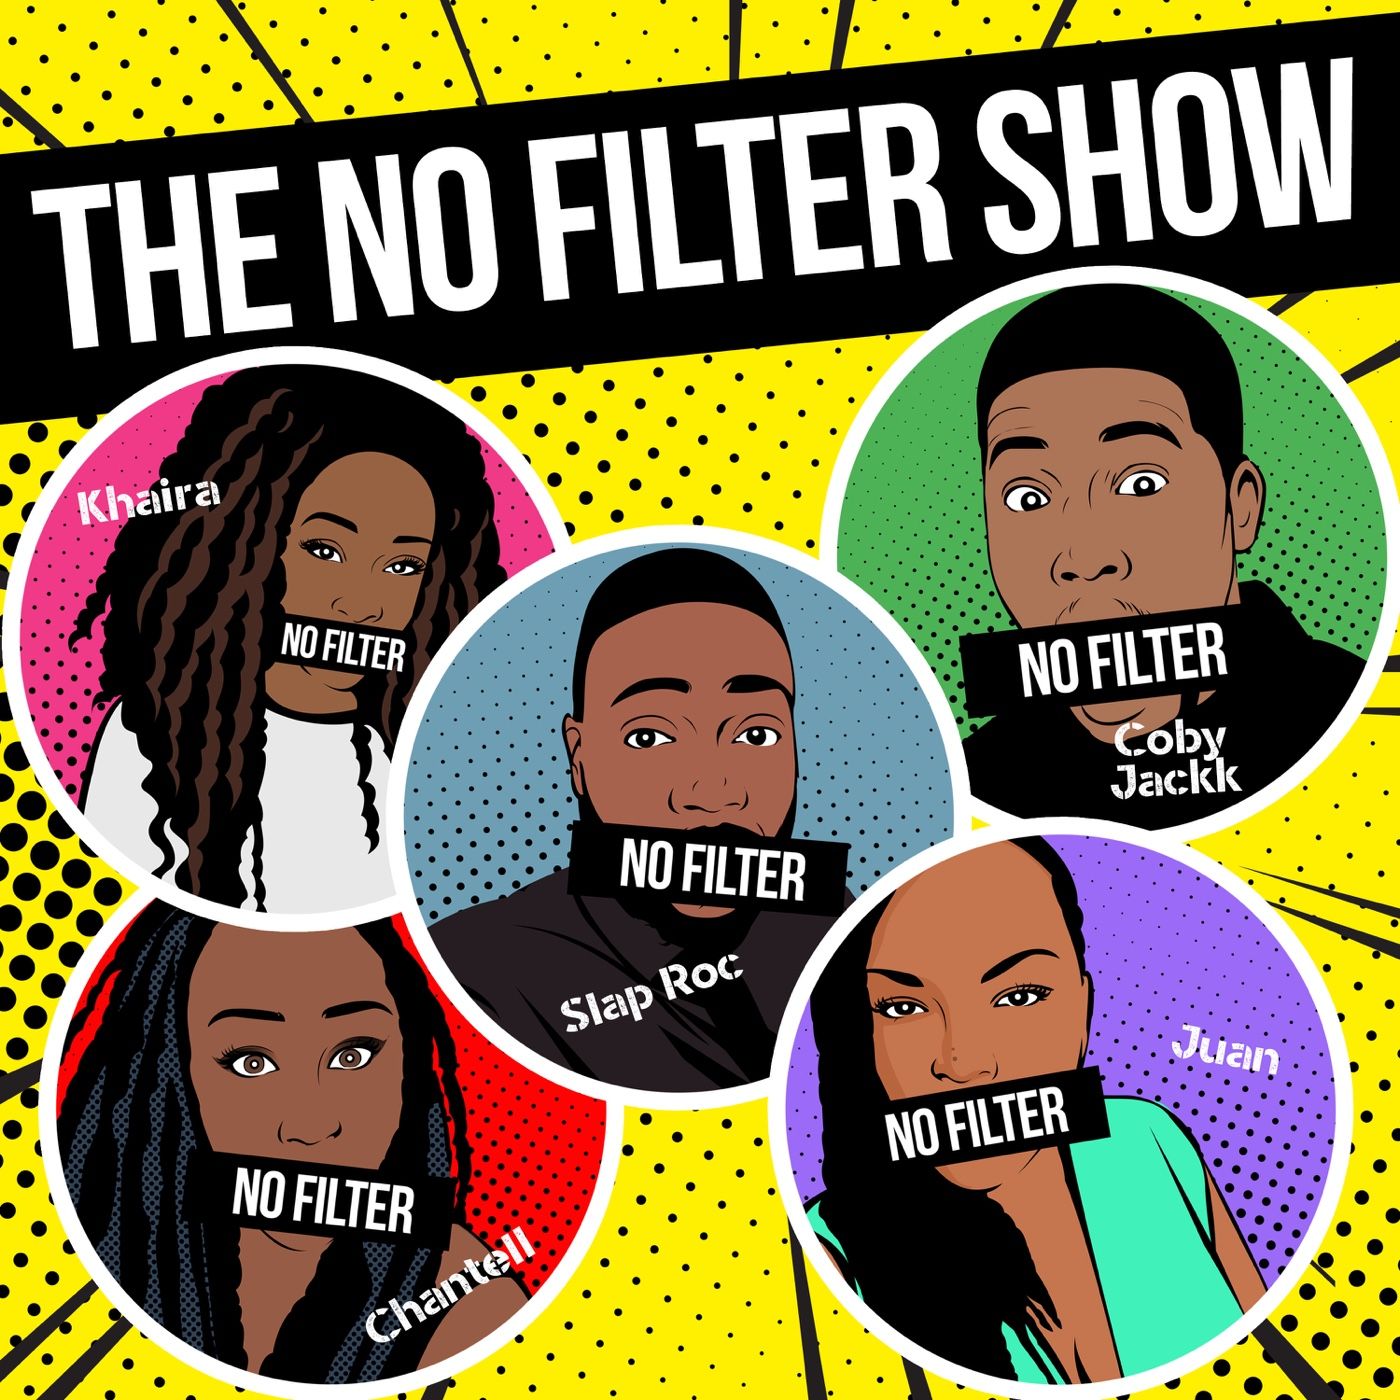 The No Filter Show